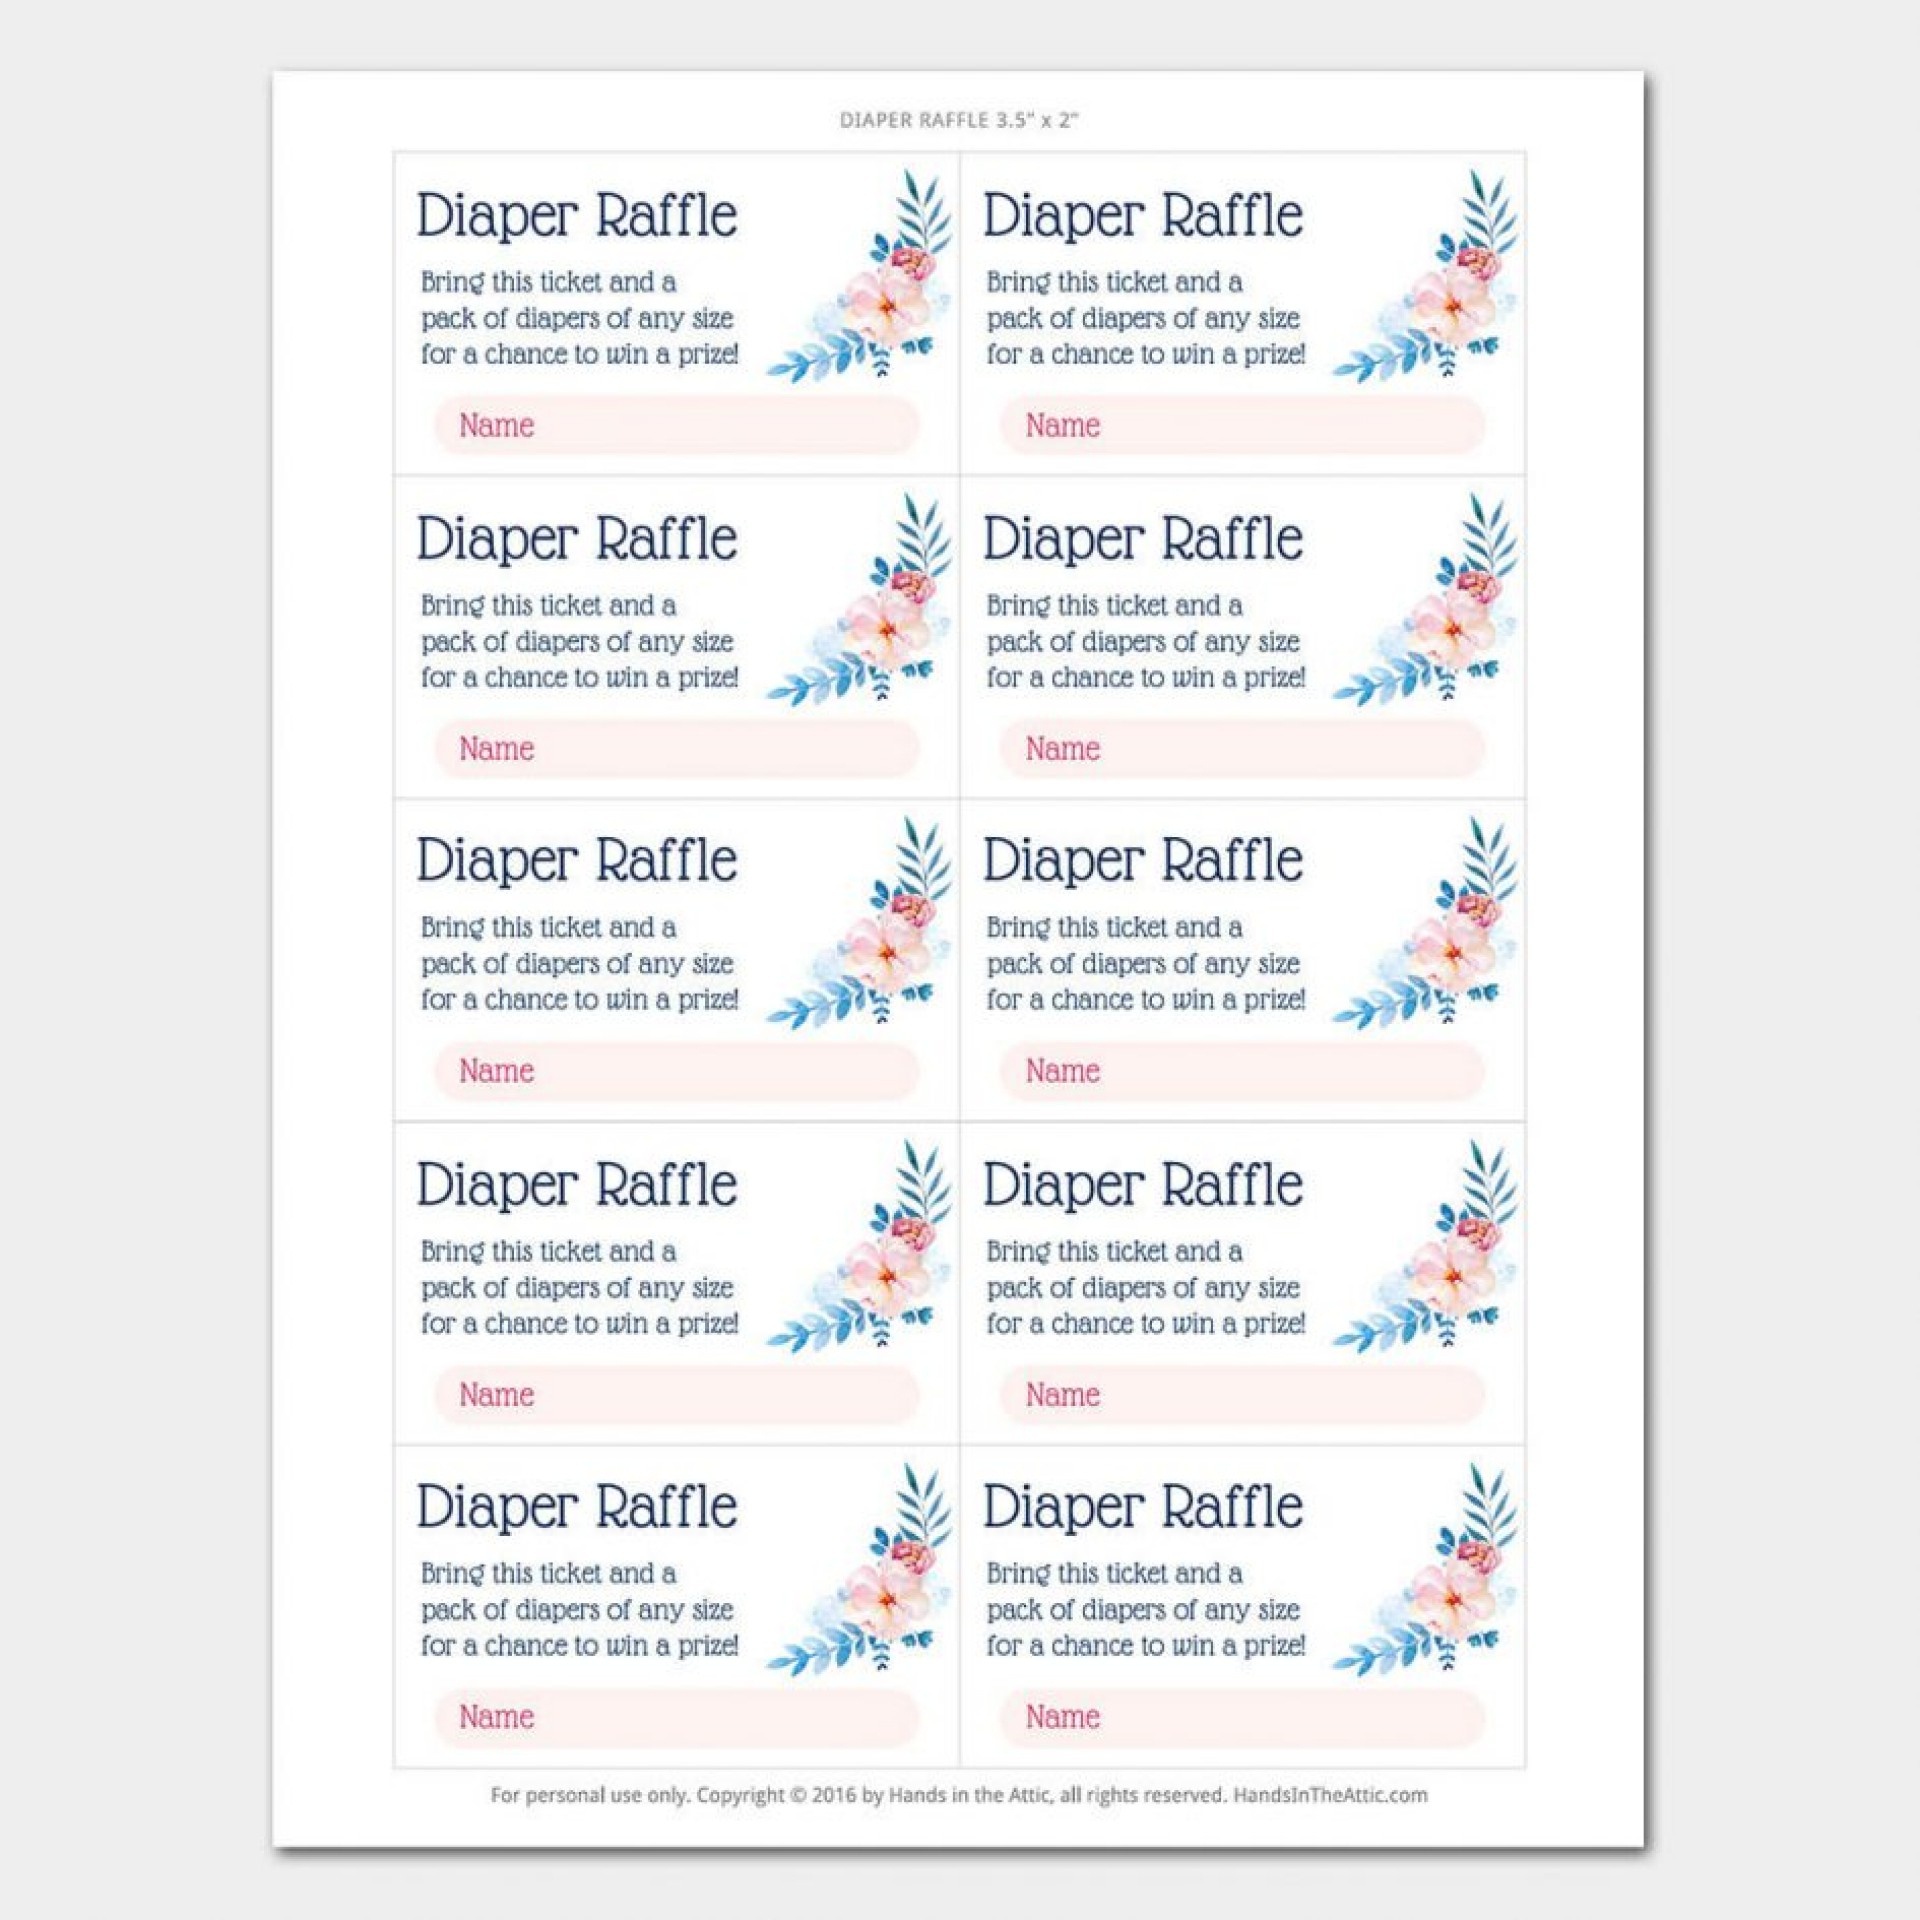 009 Diaper Raffle Tickets Template Ideas Rare Free Owl Ticket - Free Printable Diaper Raffle Tickets Elephant